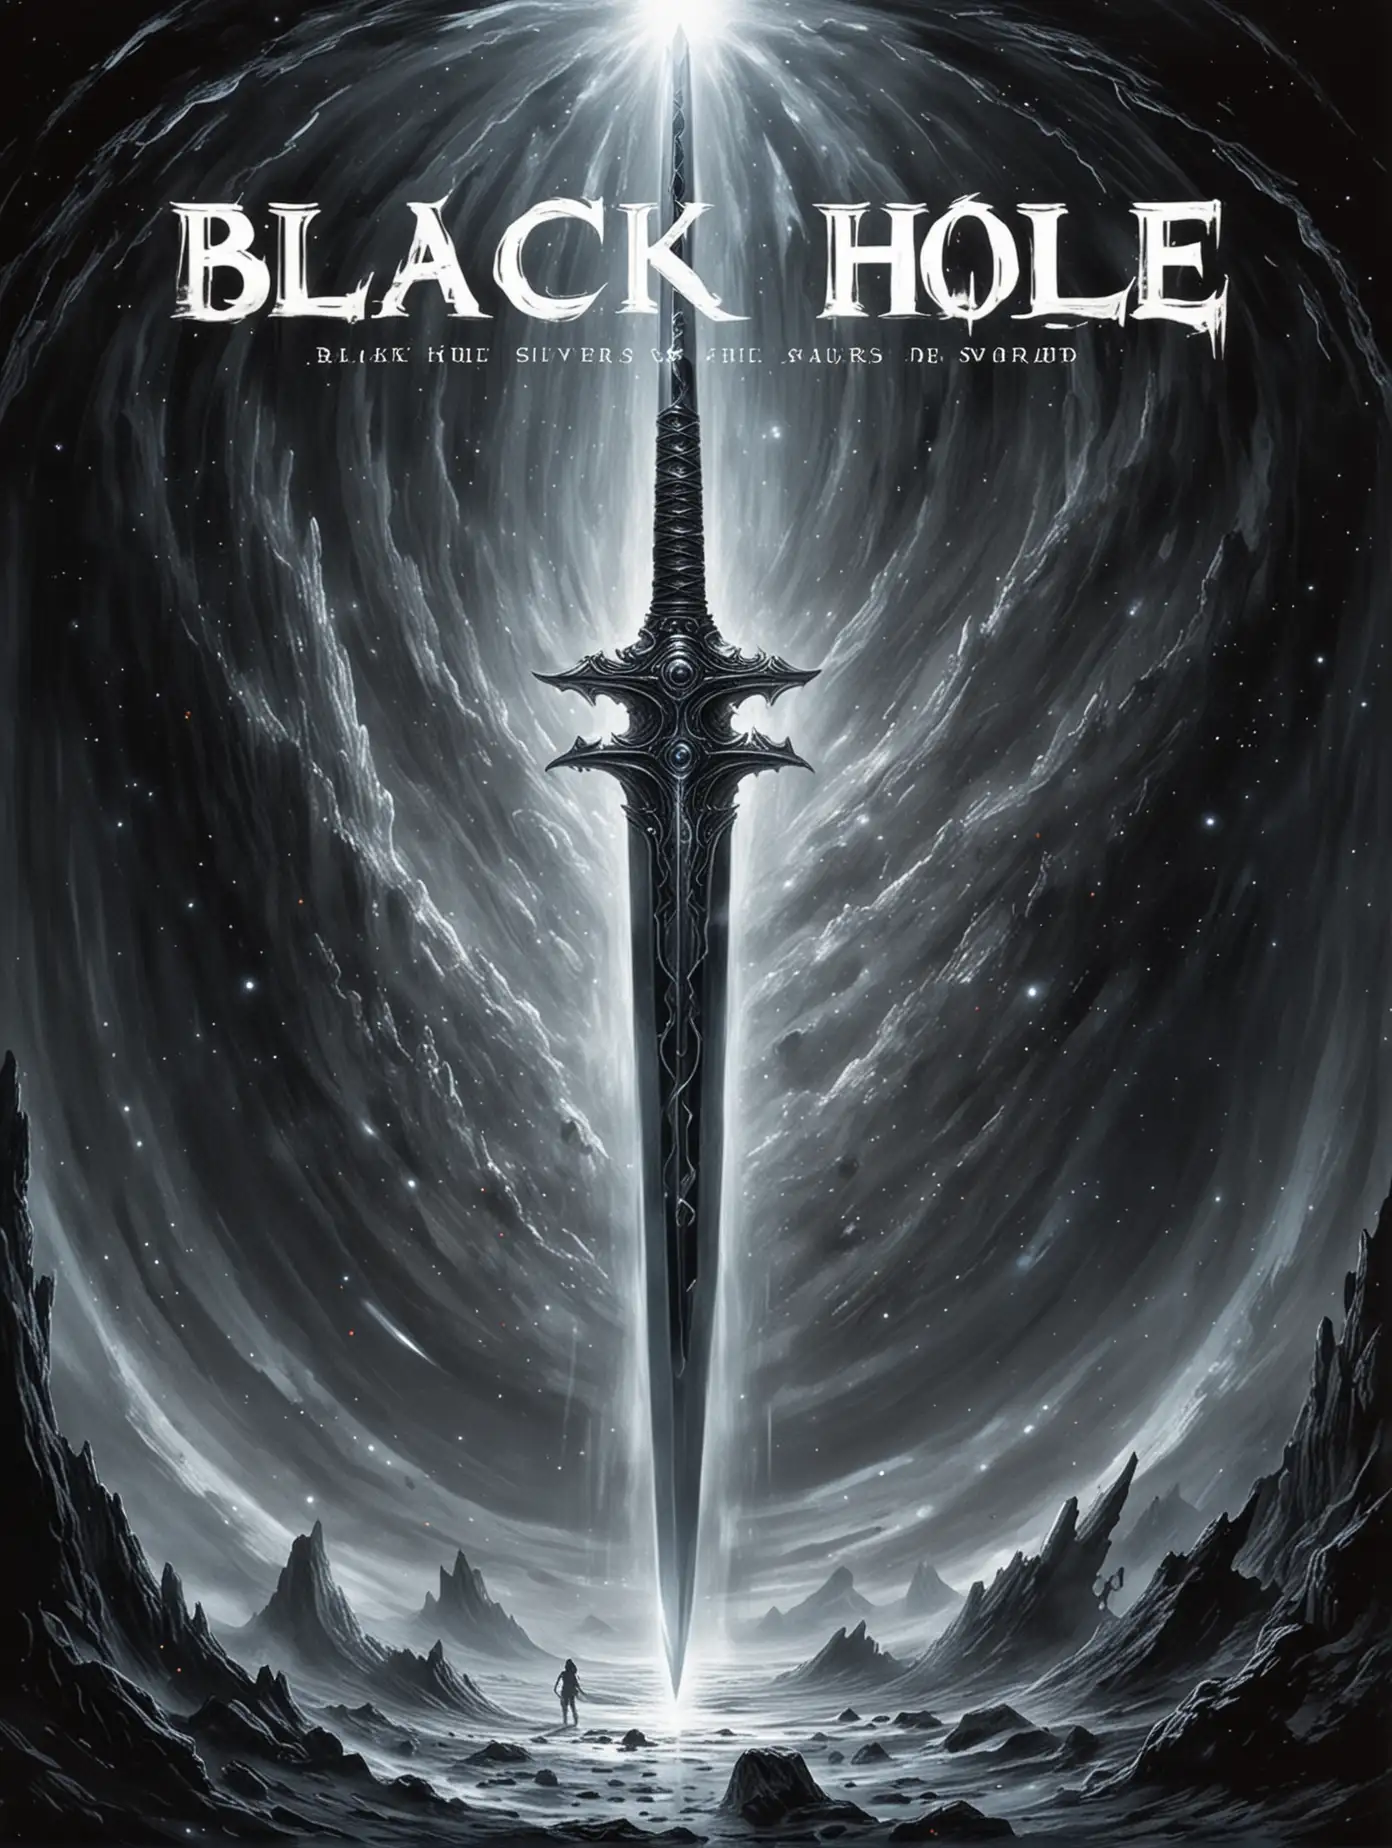 Black hole, silver sword